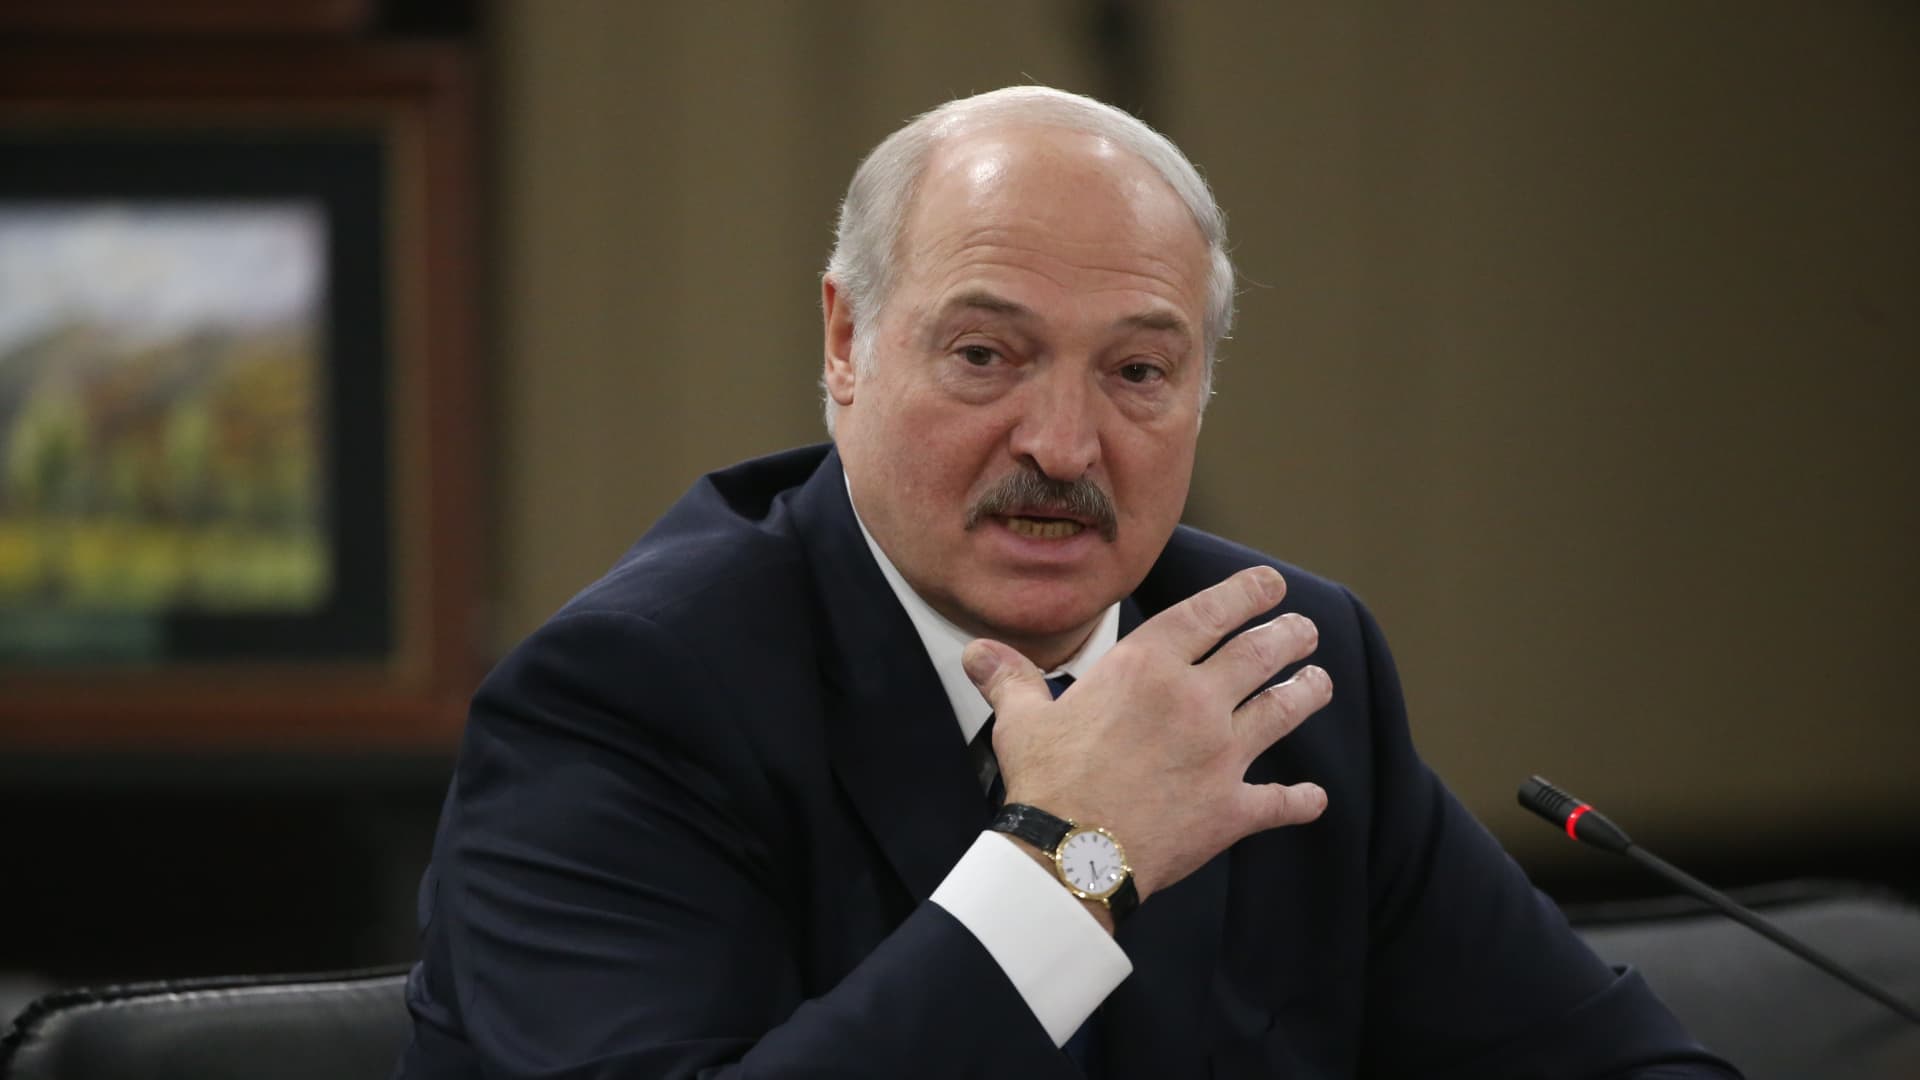 Belarus' president dismisses coronavirus risk, encourages citizens to drink vodka and visit saunas